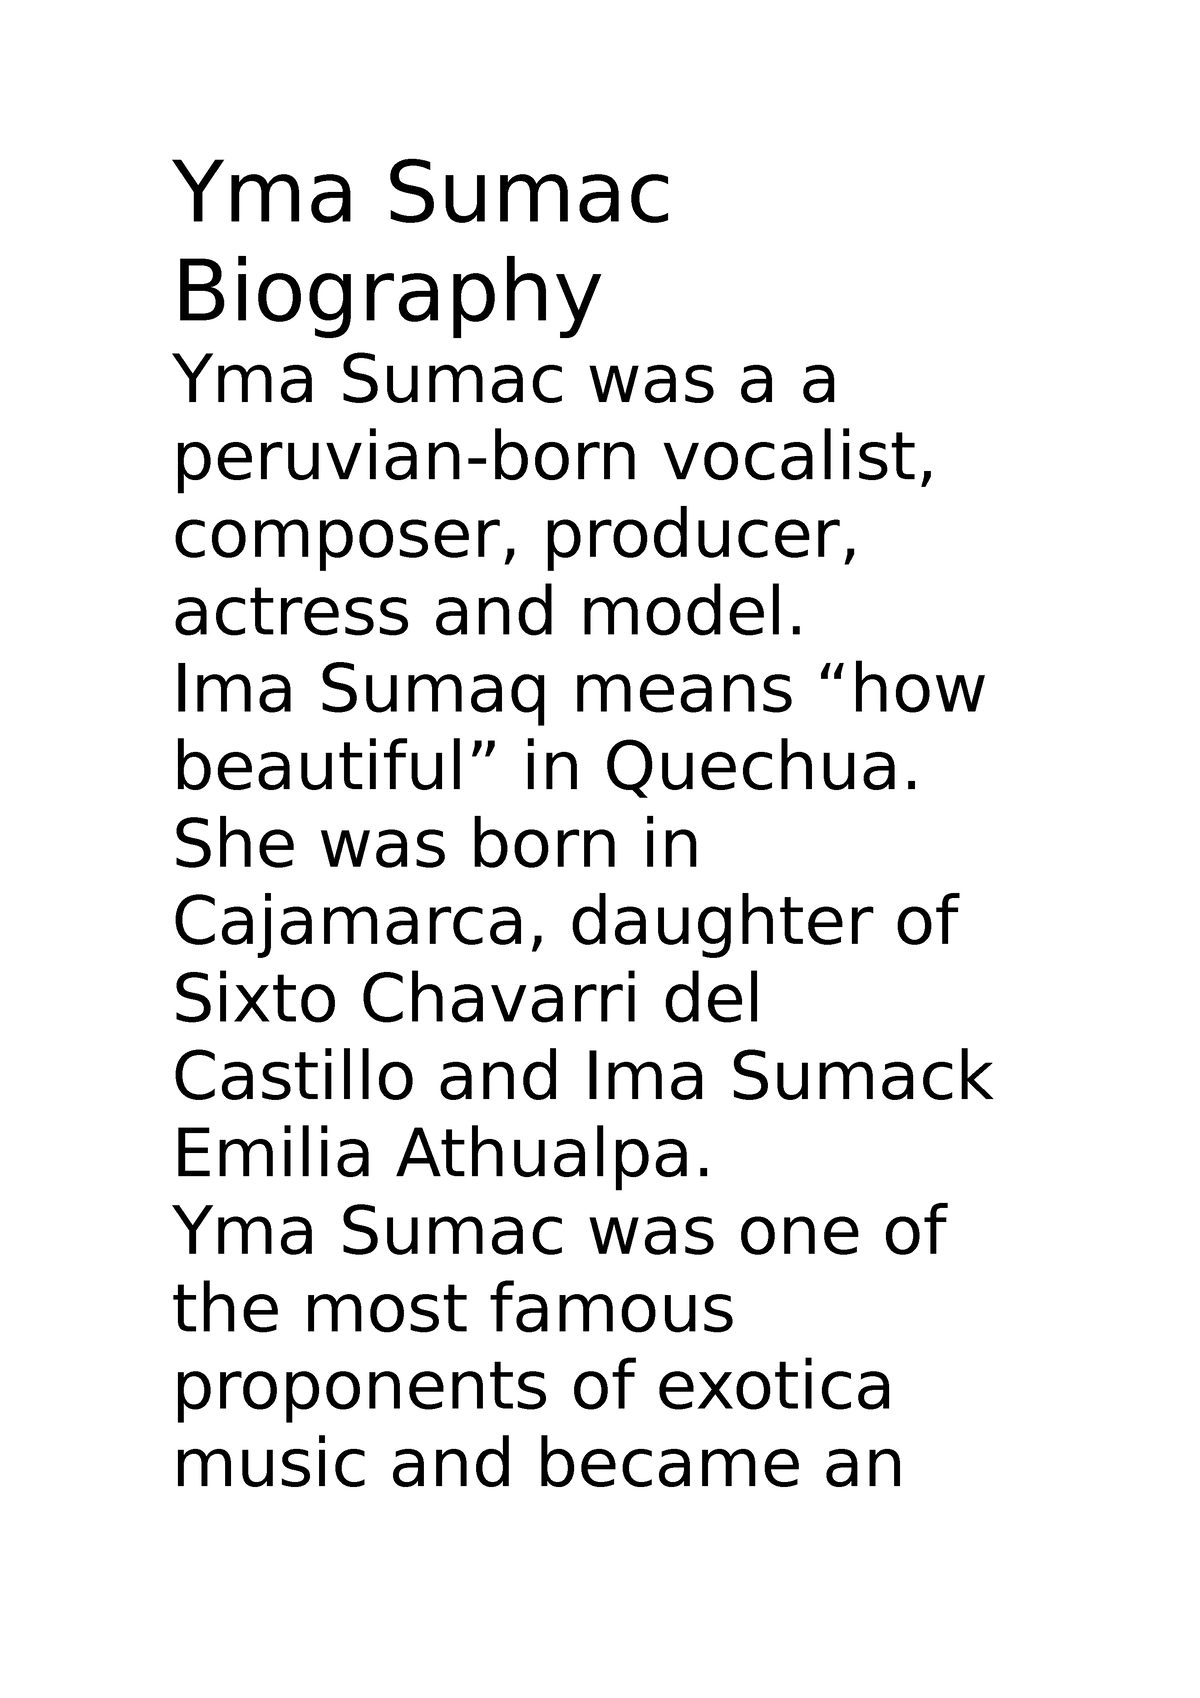 Yma Sumac Biography xd semana 4 xd Yma Sumac Biography Yma Sumac